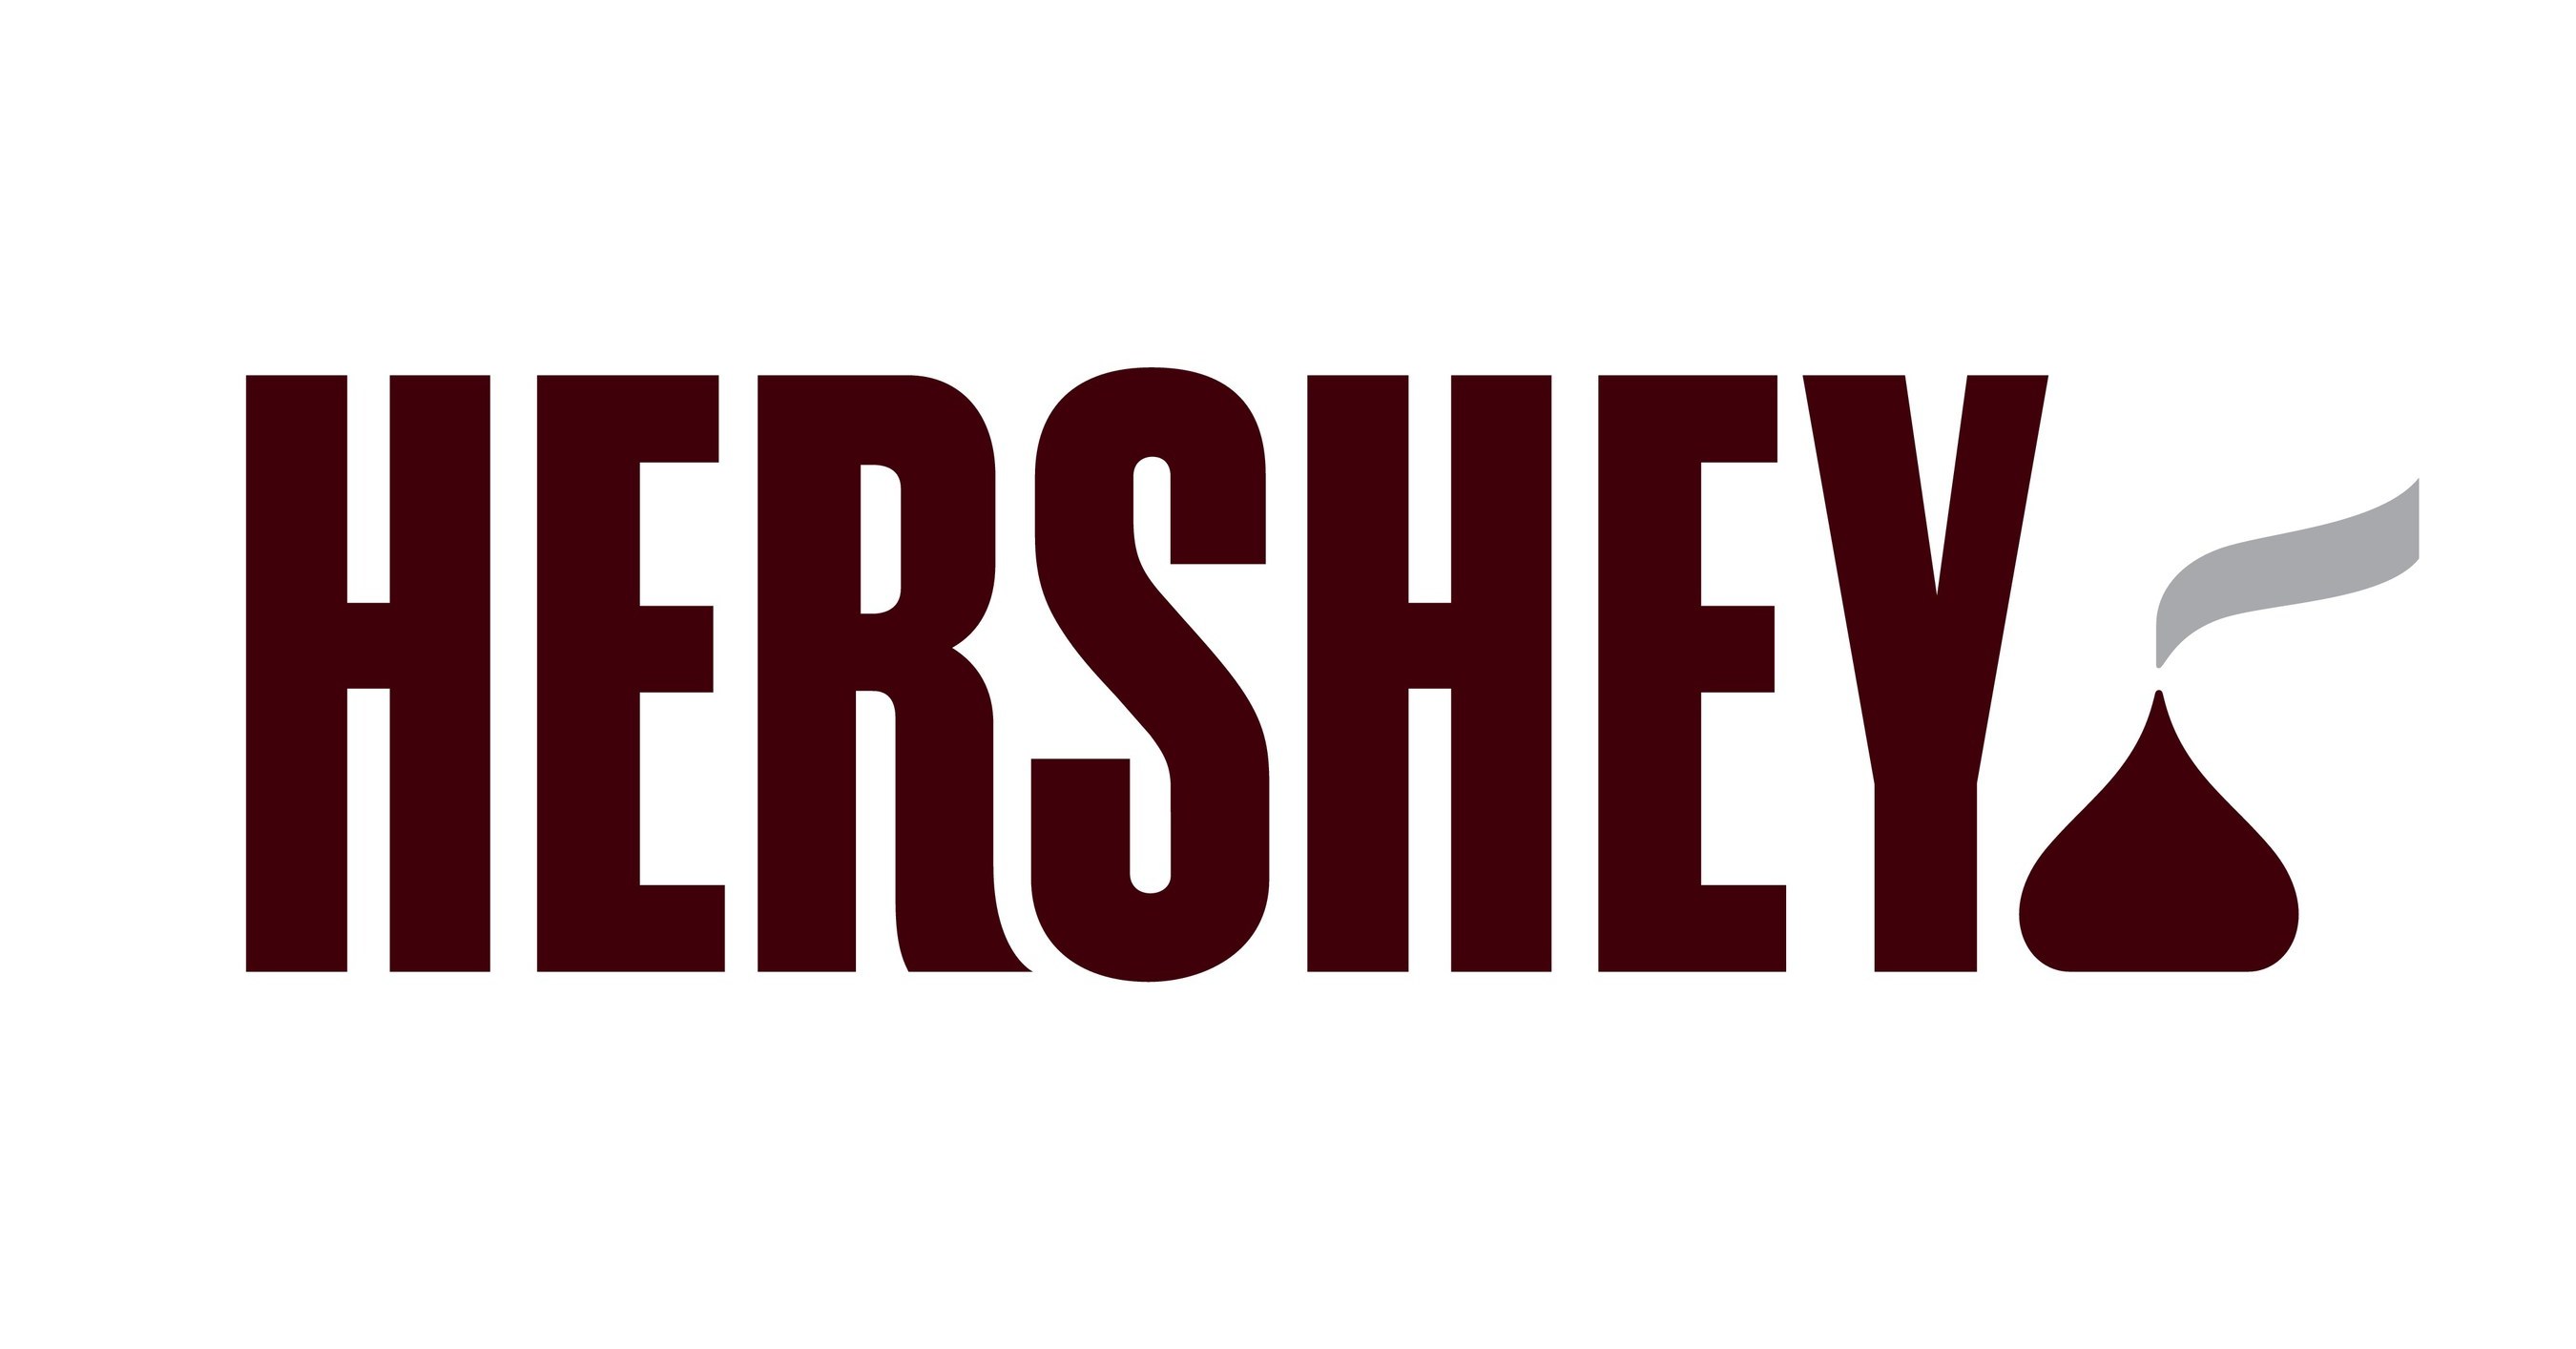 https://mma.prnewswire.com/media/1246276/The_Hershey_Company_Logo.jpg?p=facebook